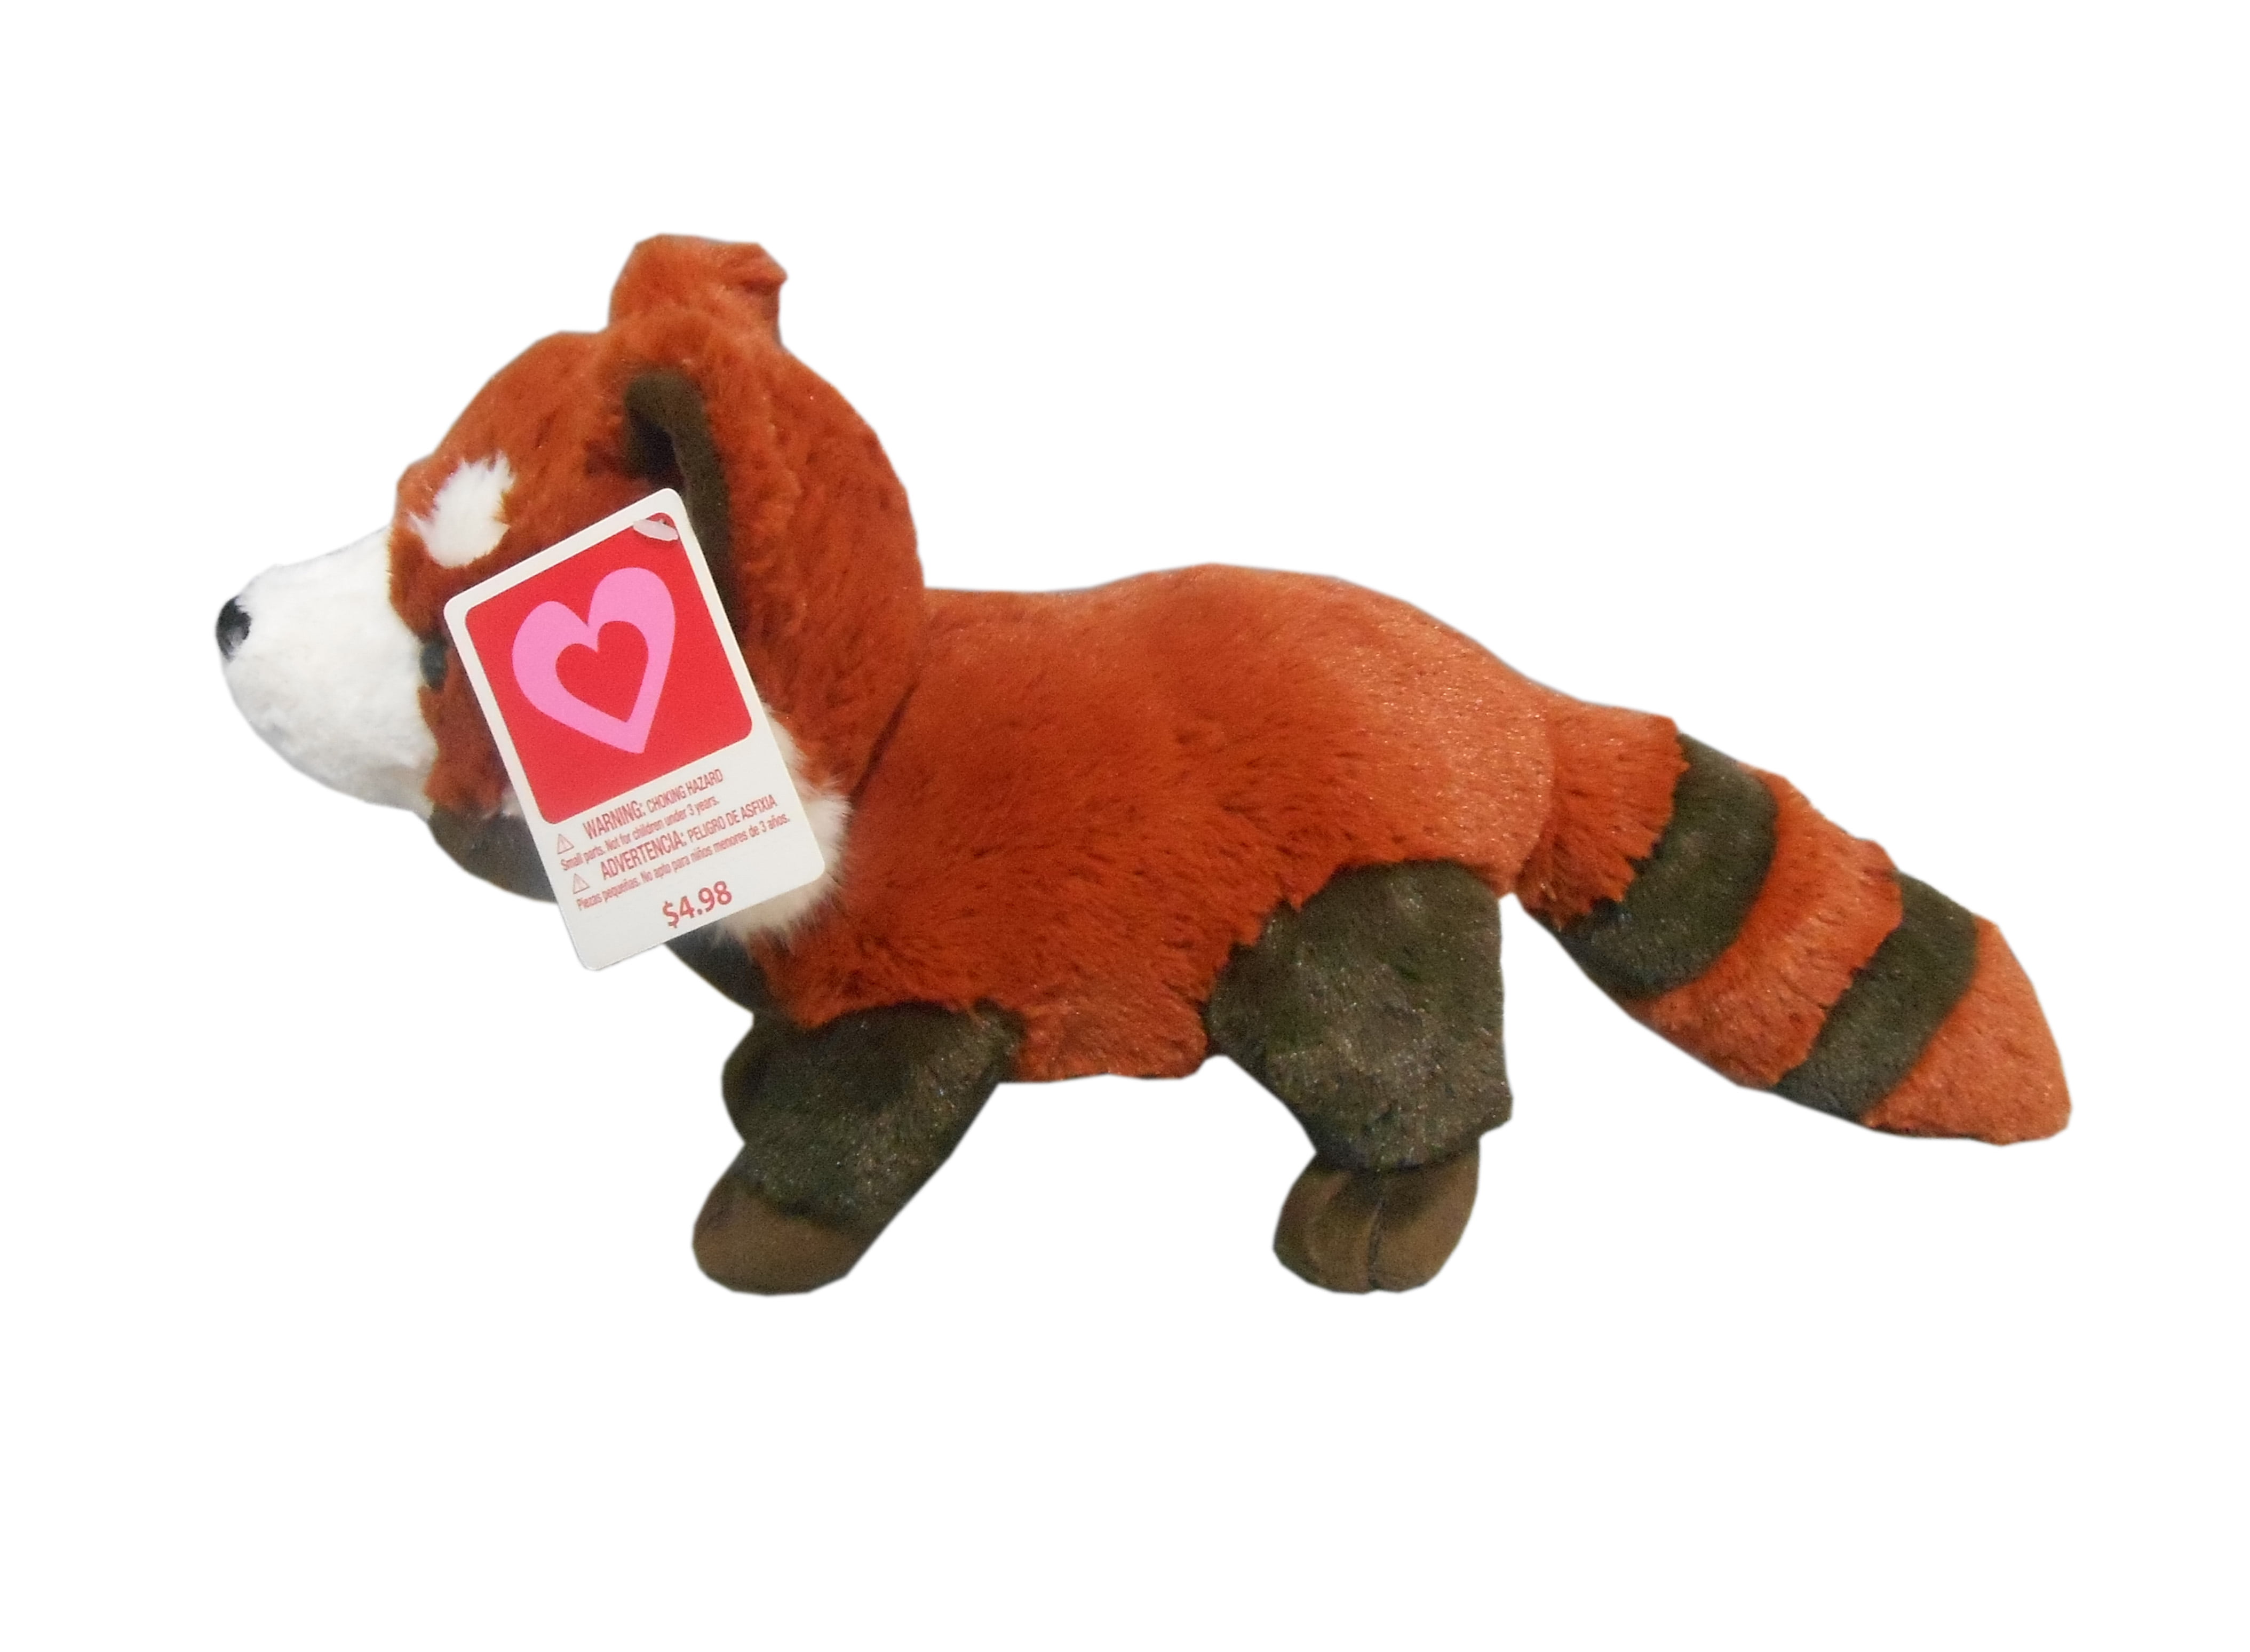 red panda stuffed animal walmart